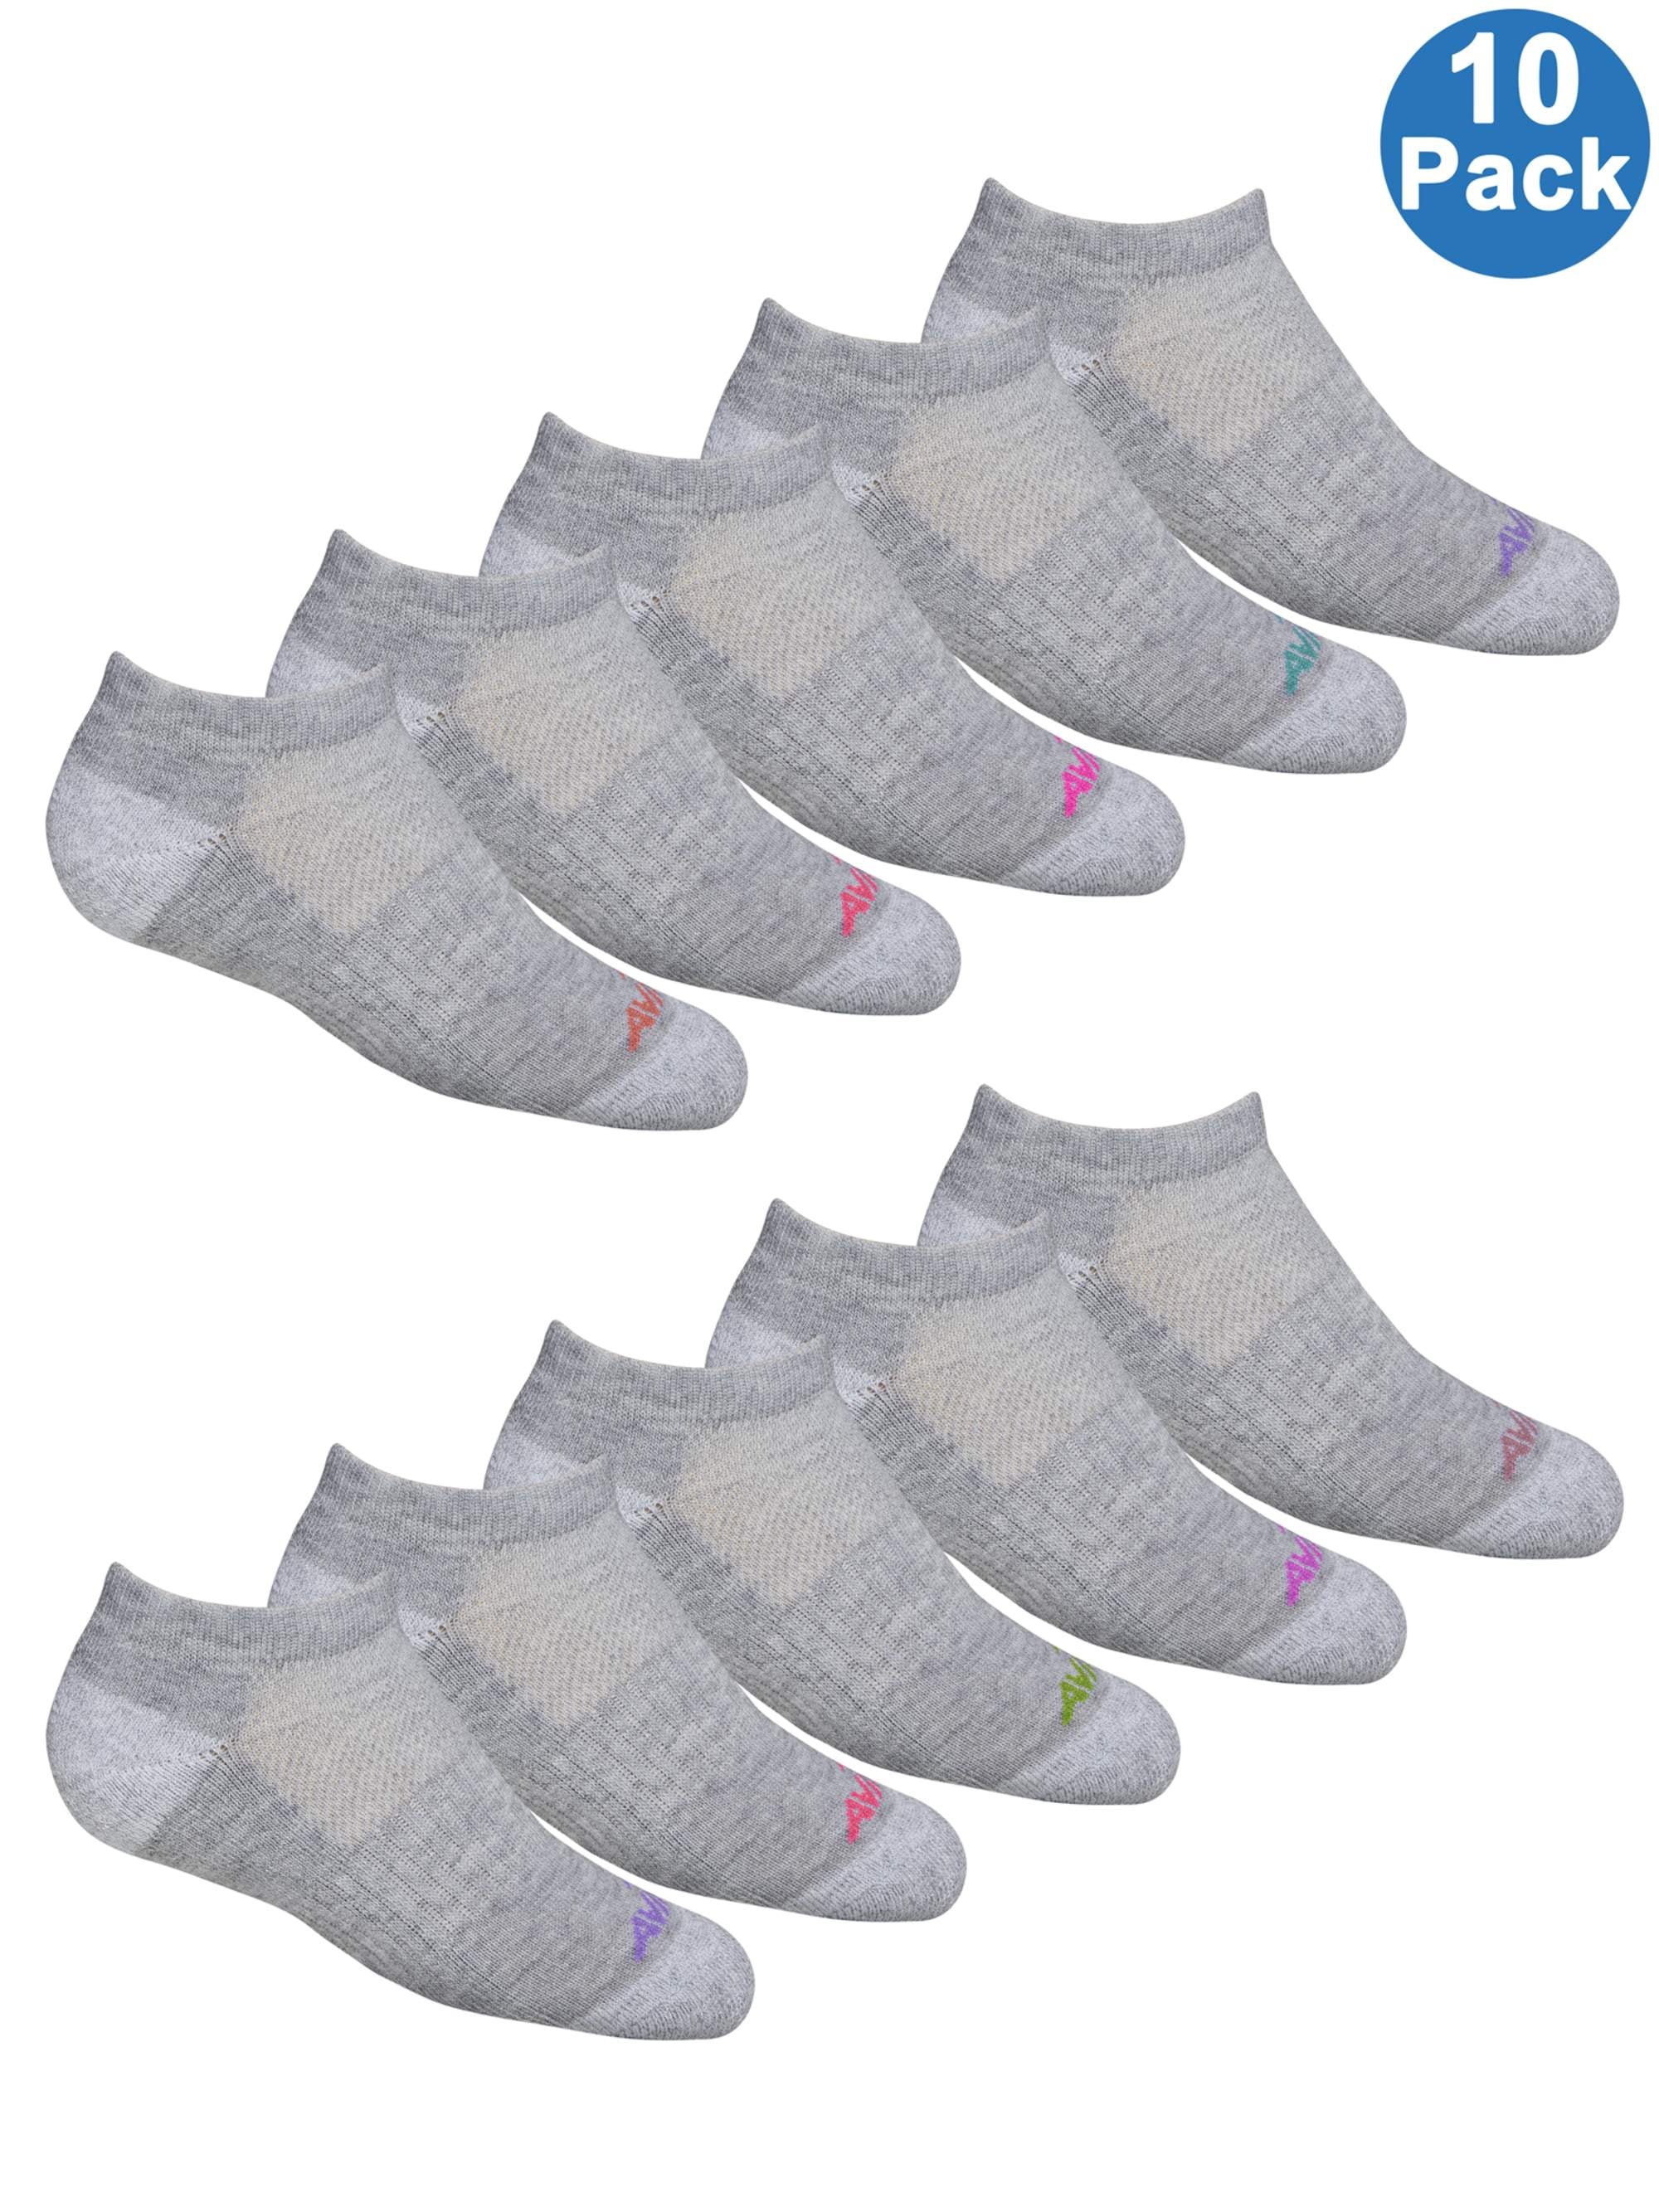 multi color Girls' low cut socks AVIA girls' small shoe size 4-8 10 pack 